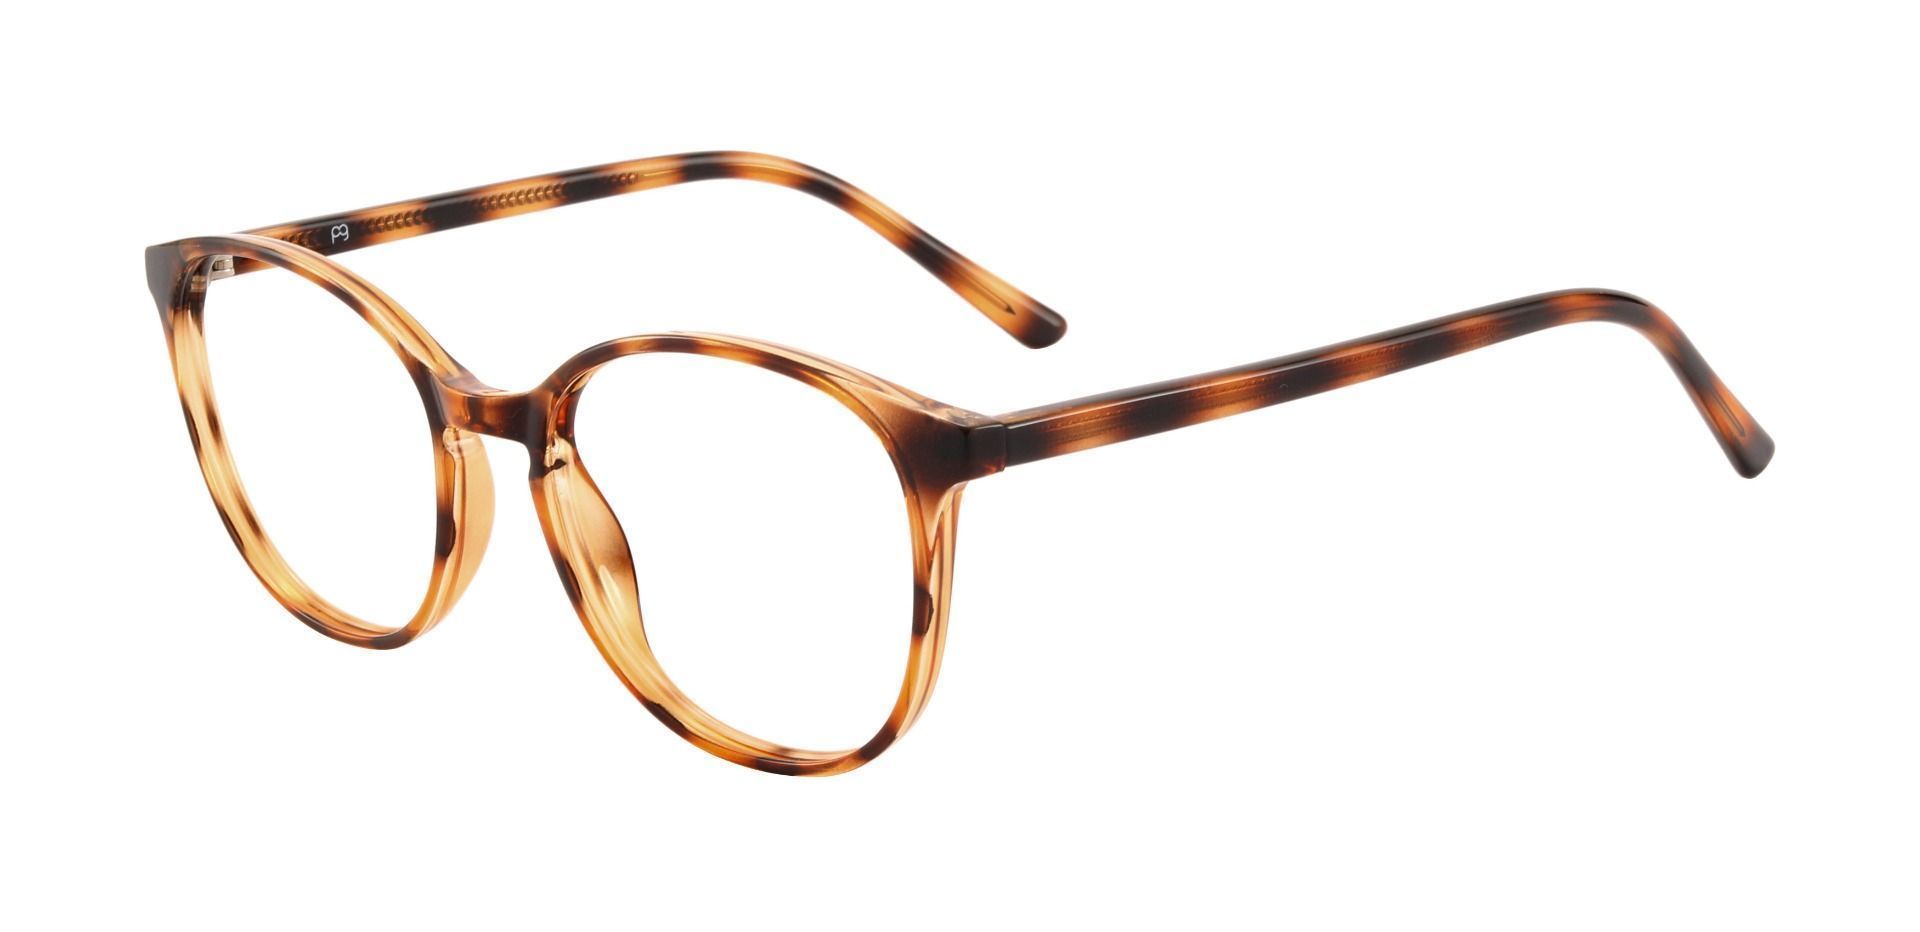 Shanley Oval Non-Rx Glasses - Tortoise